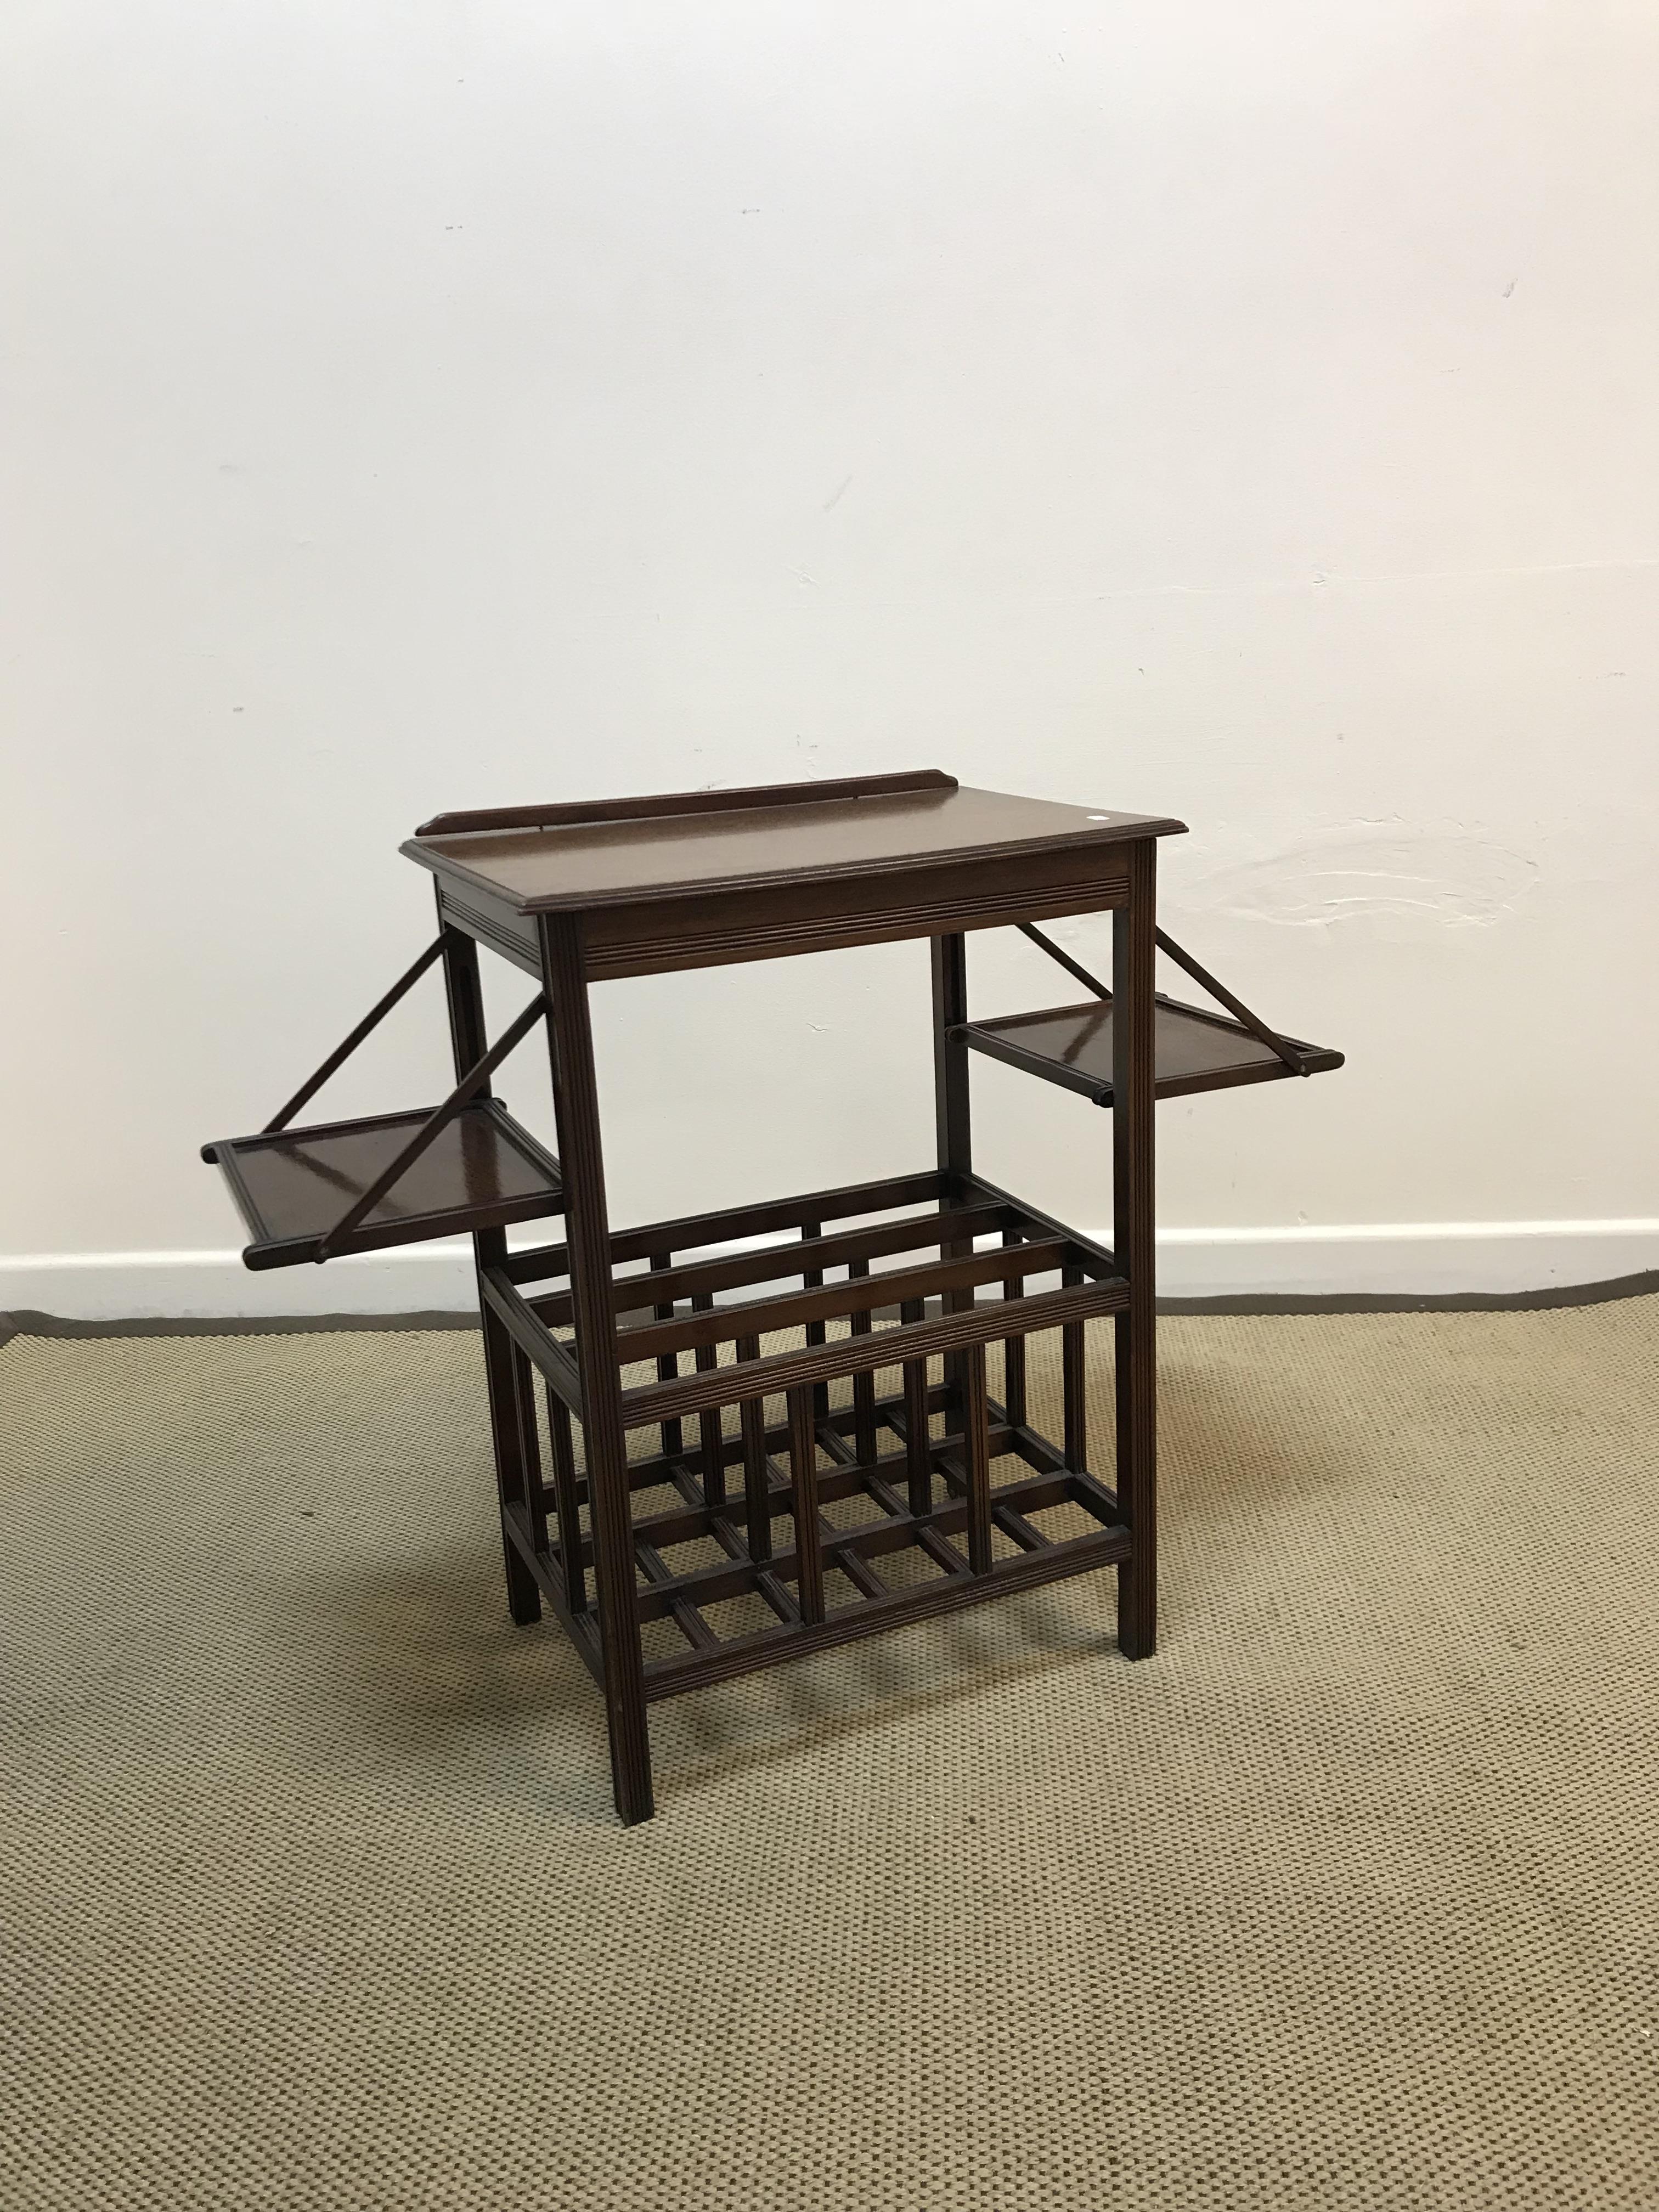 A circa 1900 Arts & Crafts mahogany reading table after an original design by Edward William Godwin,